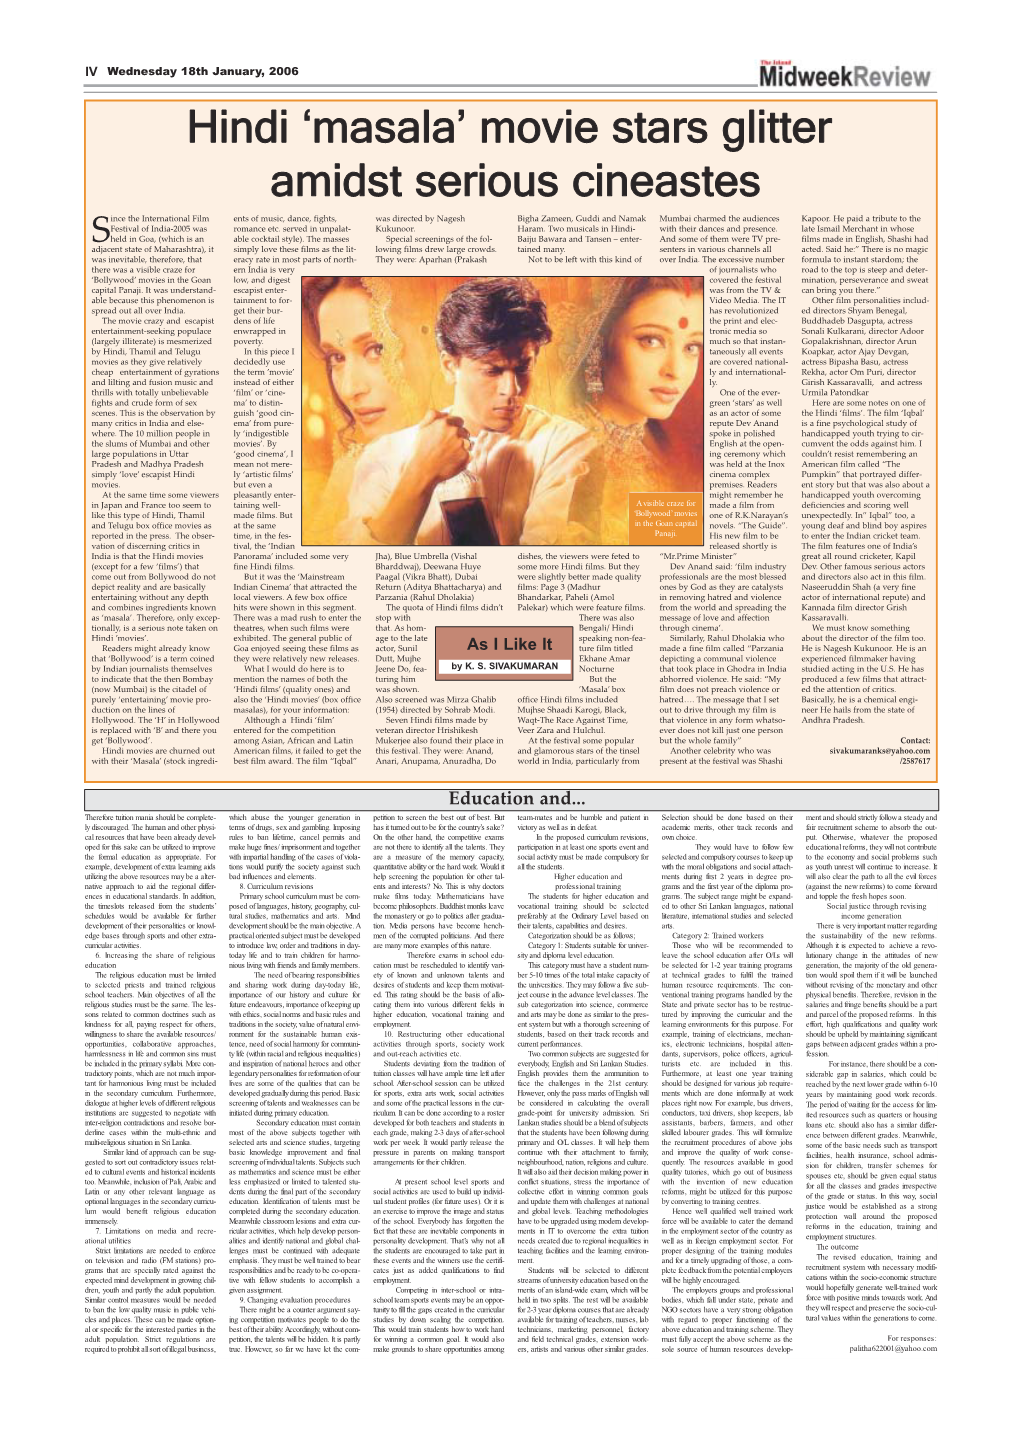 Hindi 'Masala' Movie Stars Glitter Amidst Serious Cineastes